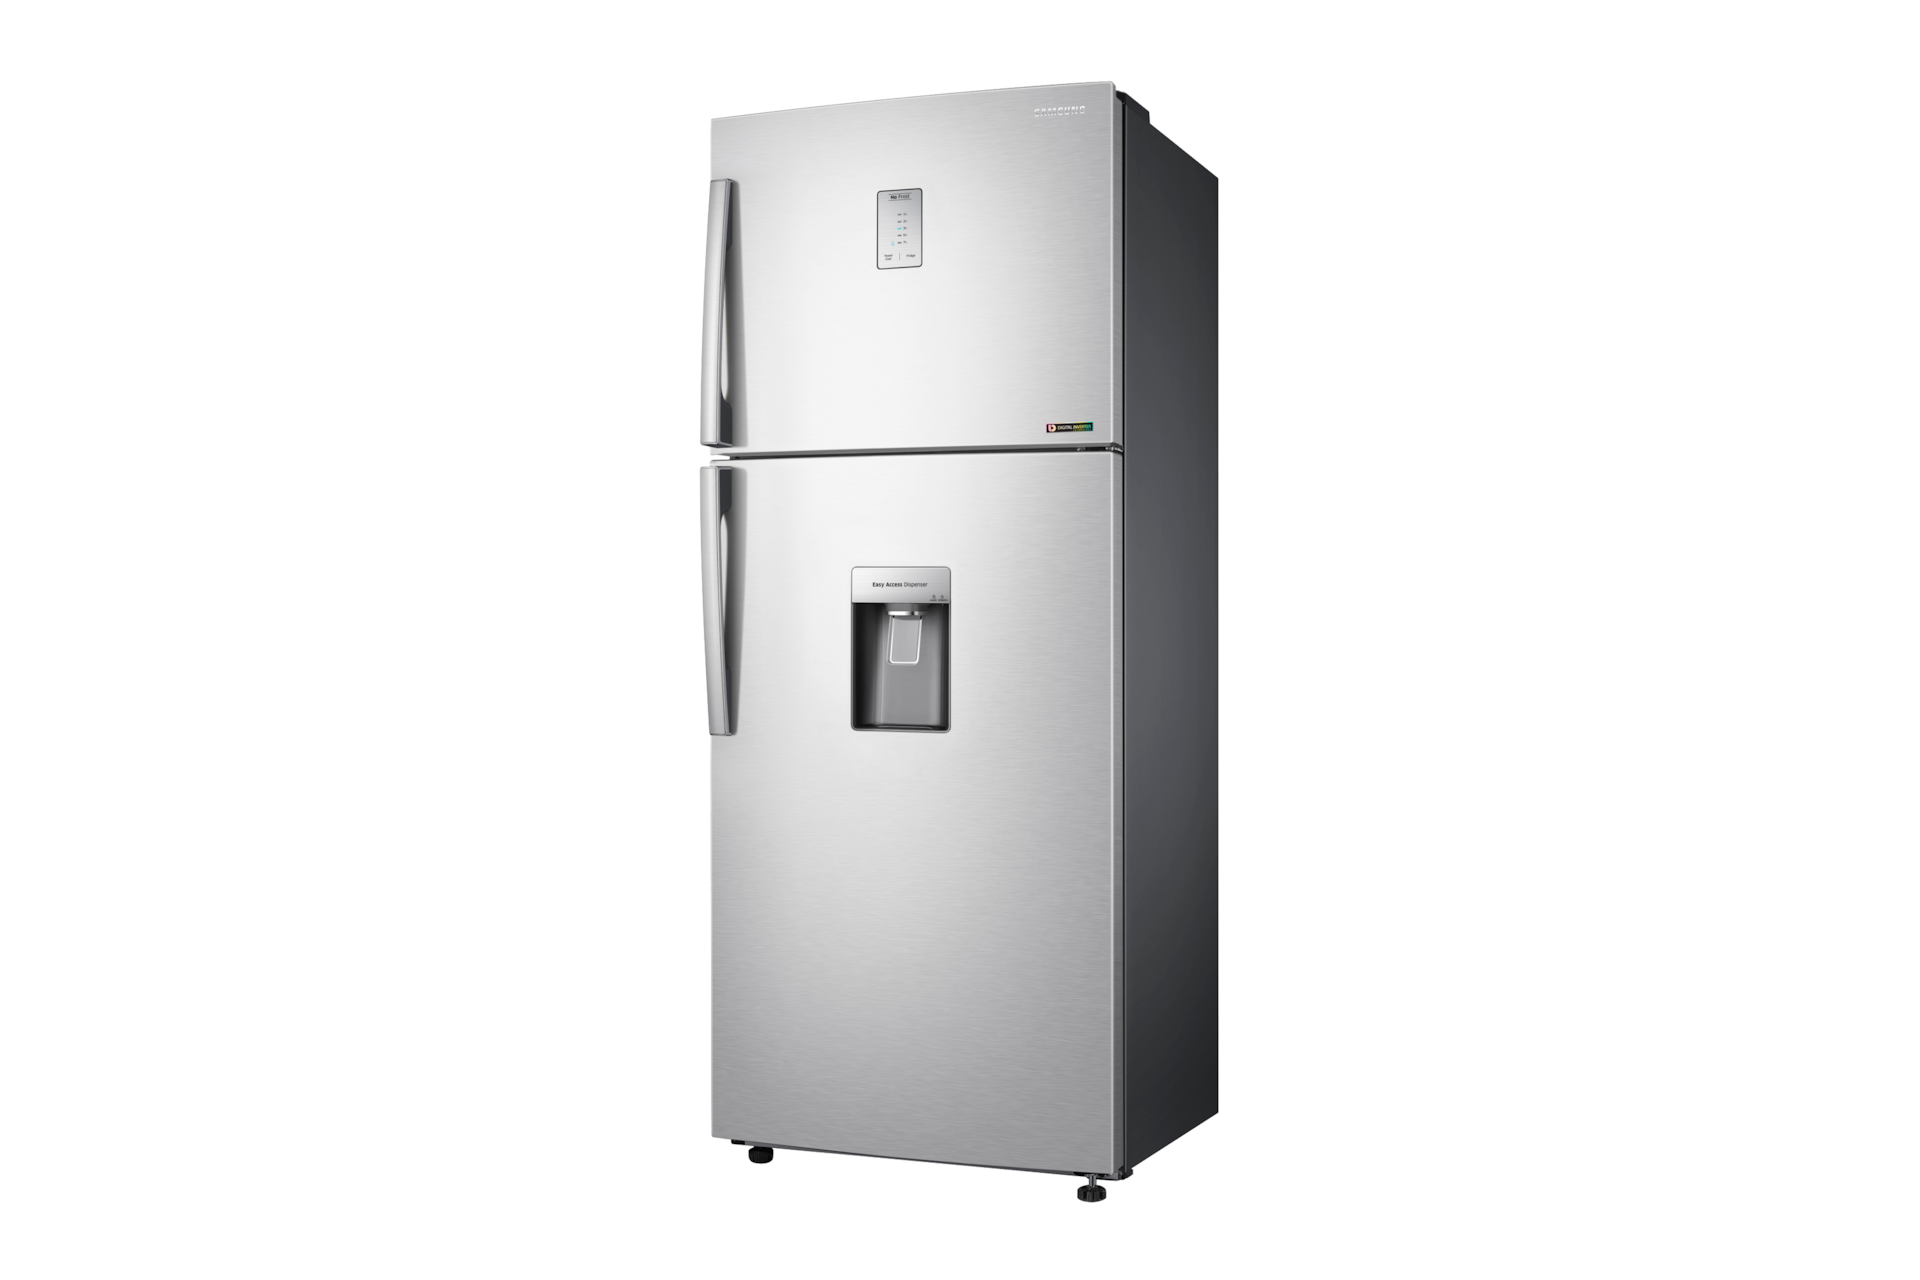 Samsung Frost Free Refrigerator Price India, Best Frost Free Fridge Freezer, Specs